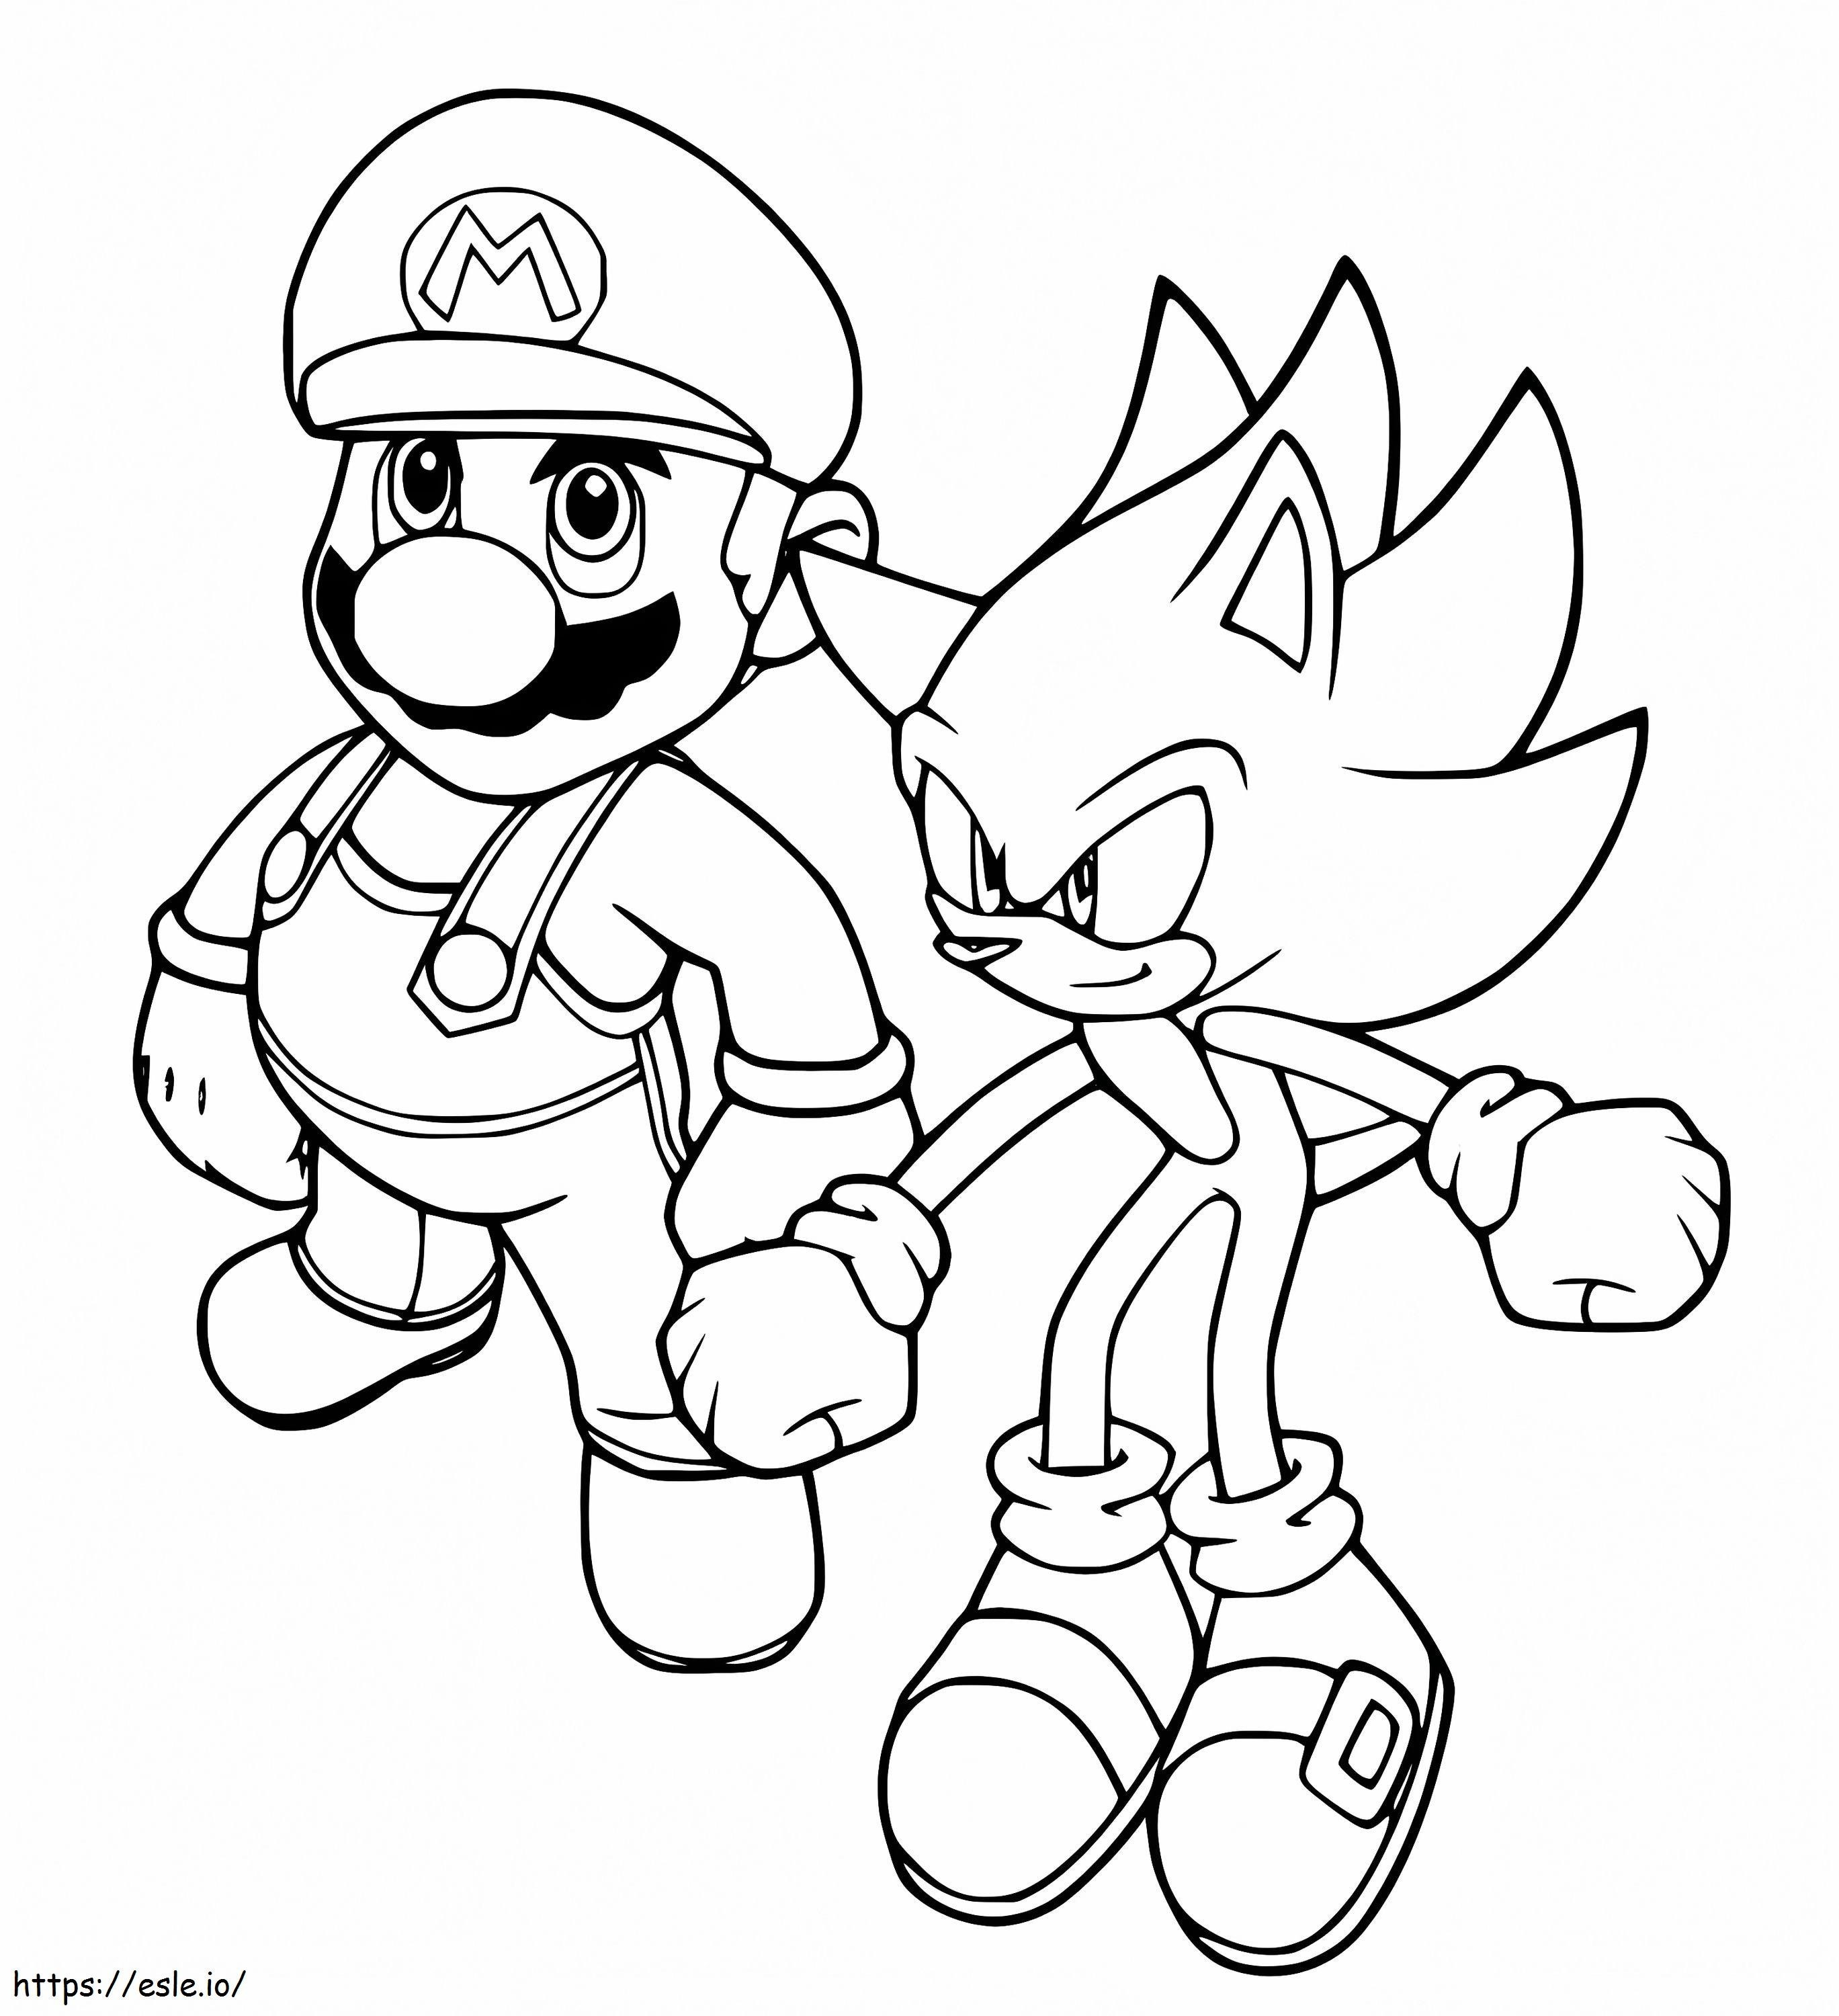 Mario dan Sonic Gambar Mewarnai